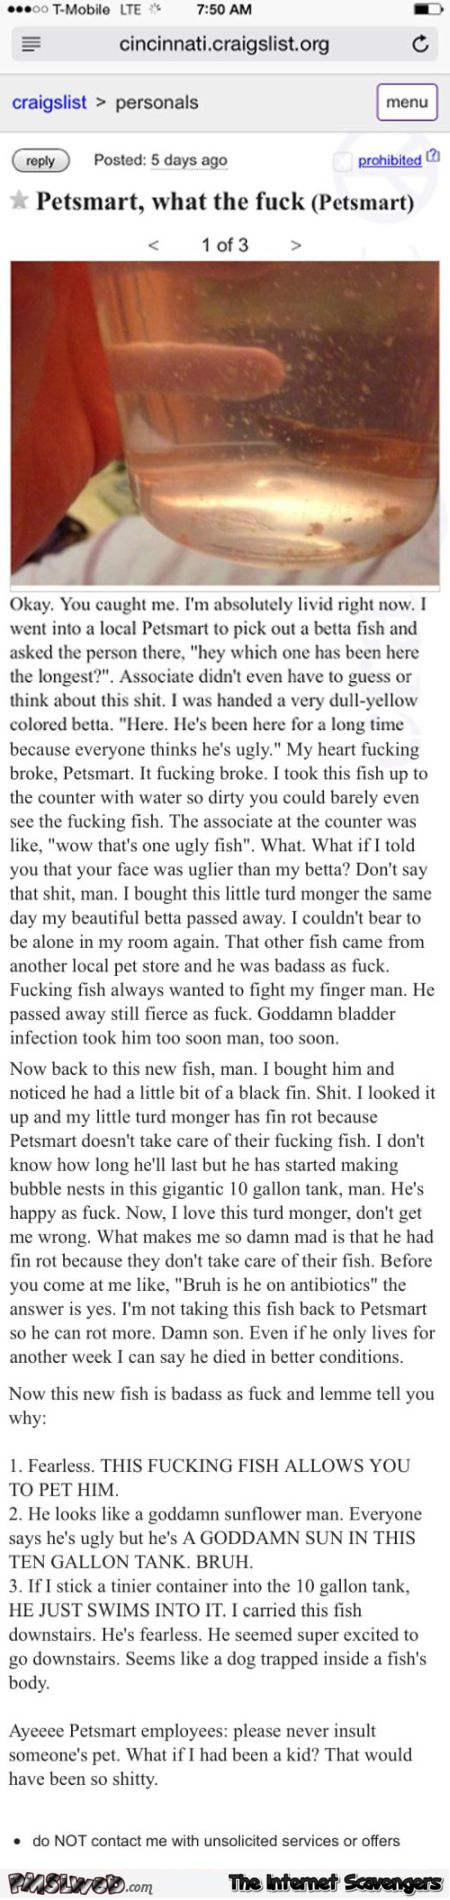 Funny petsmart betta fish story – Tuesday chuckles @PMSLweb.com